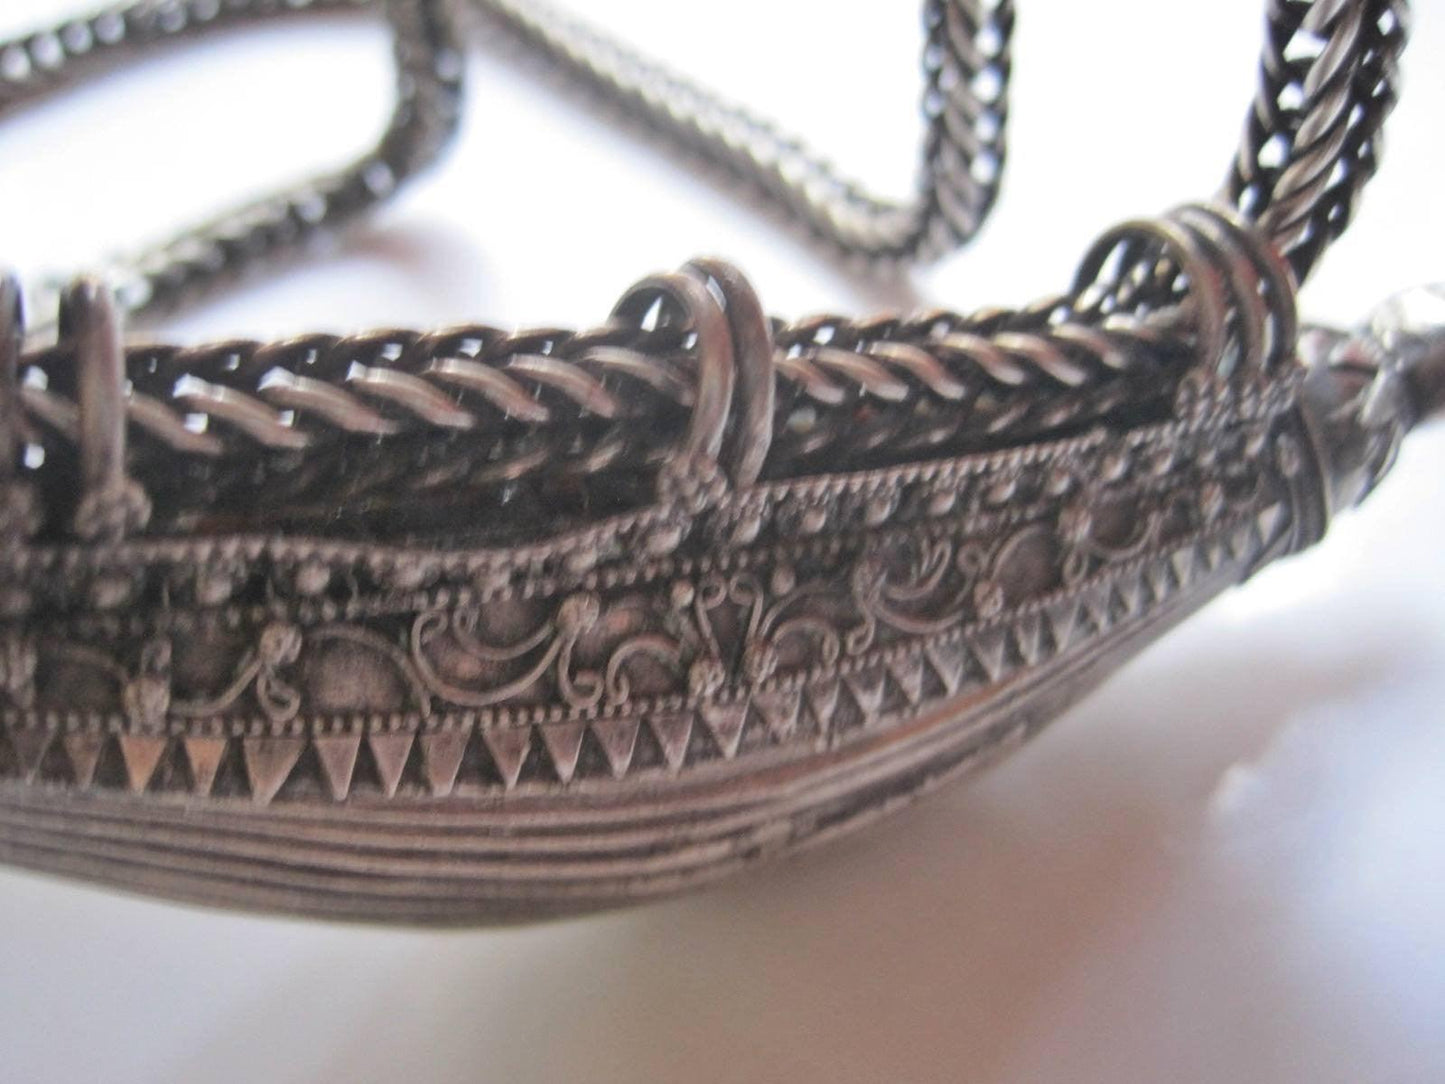 silver amulet necklace